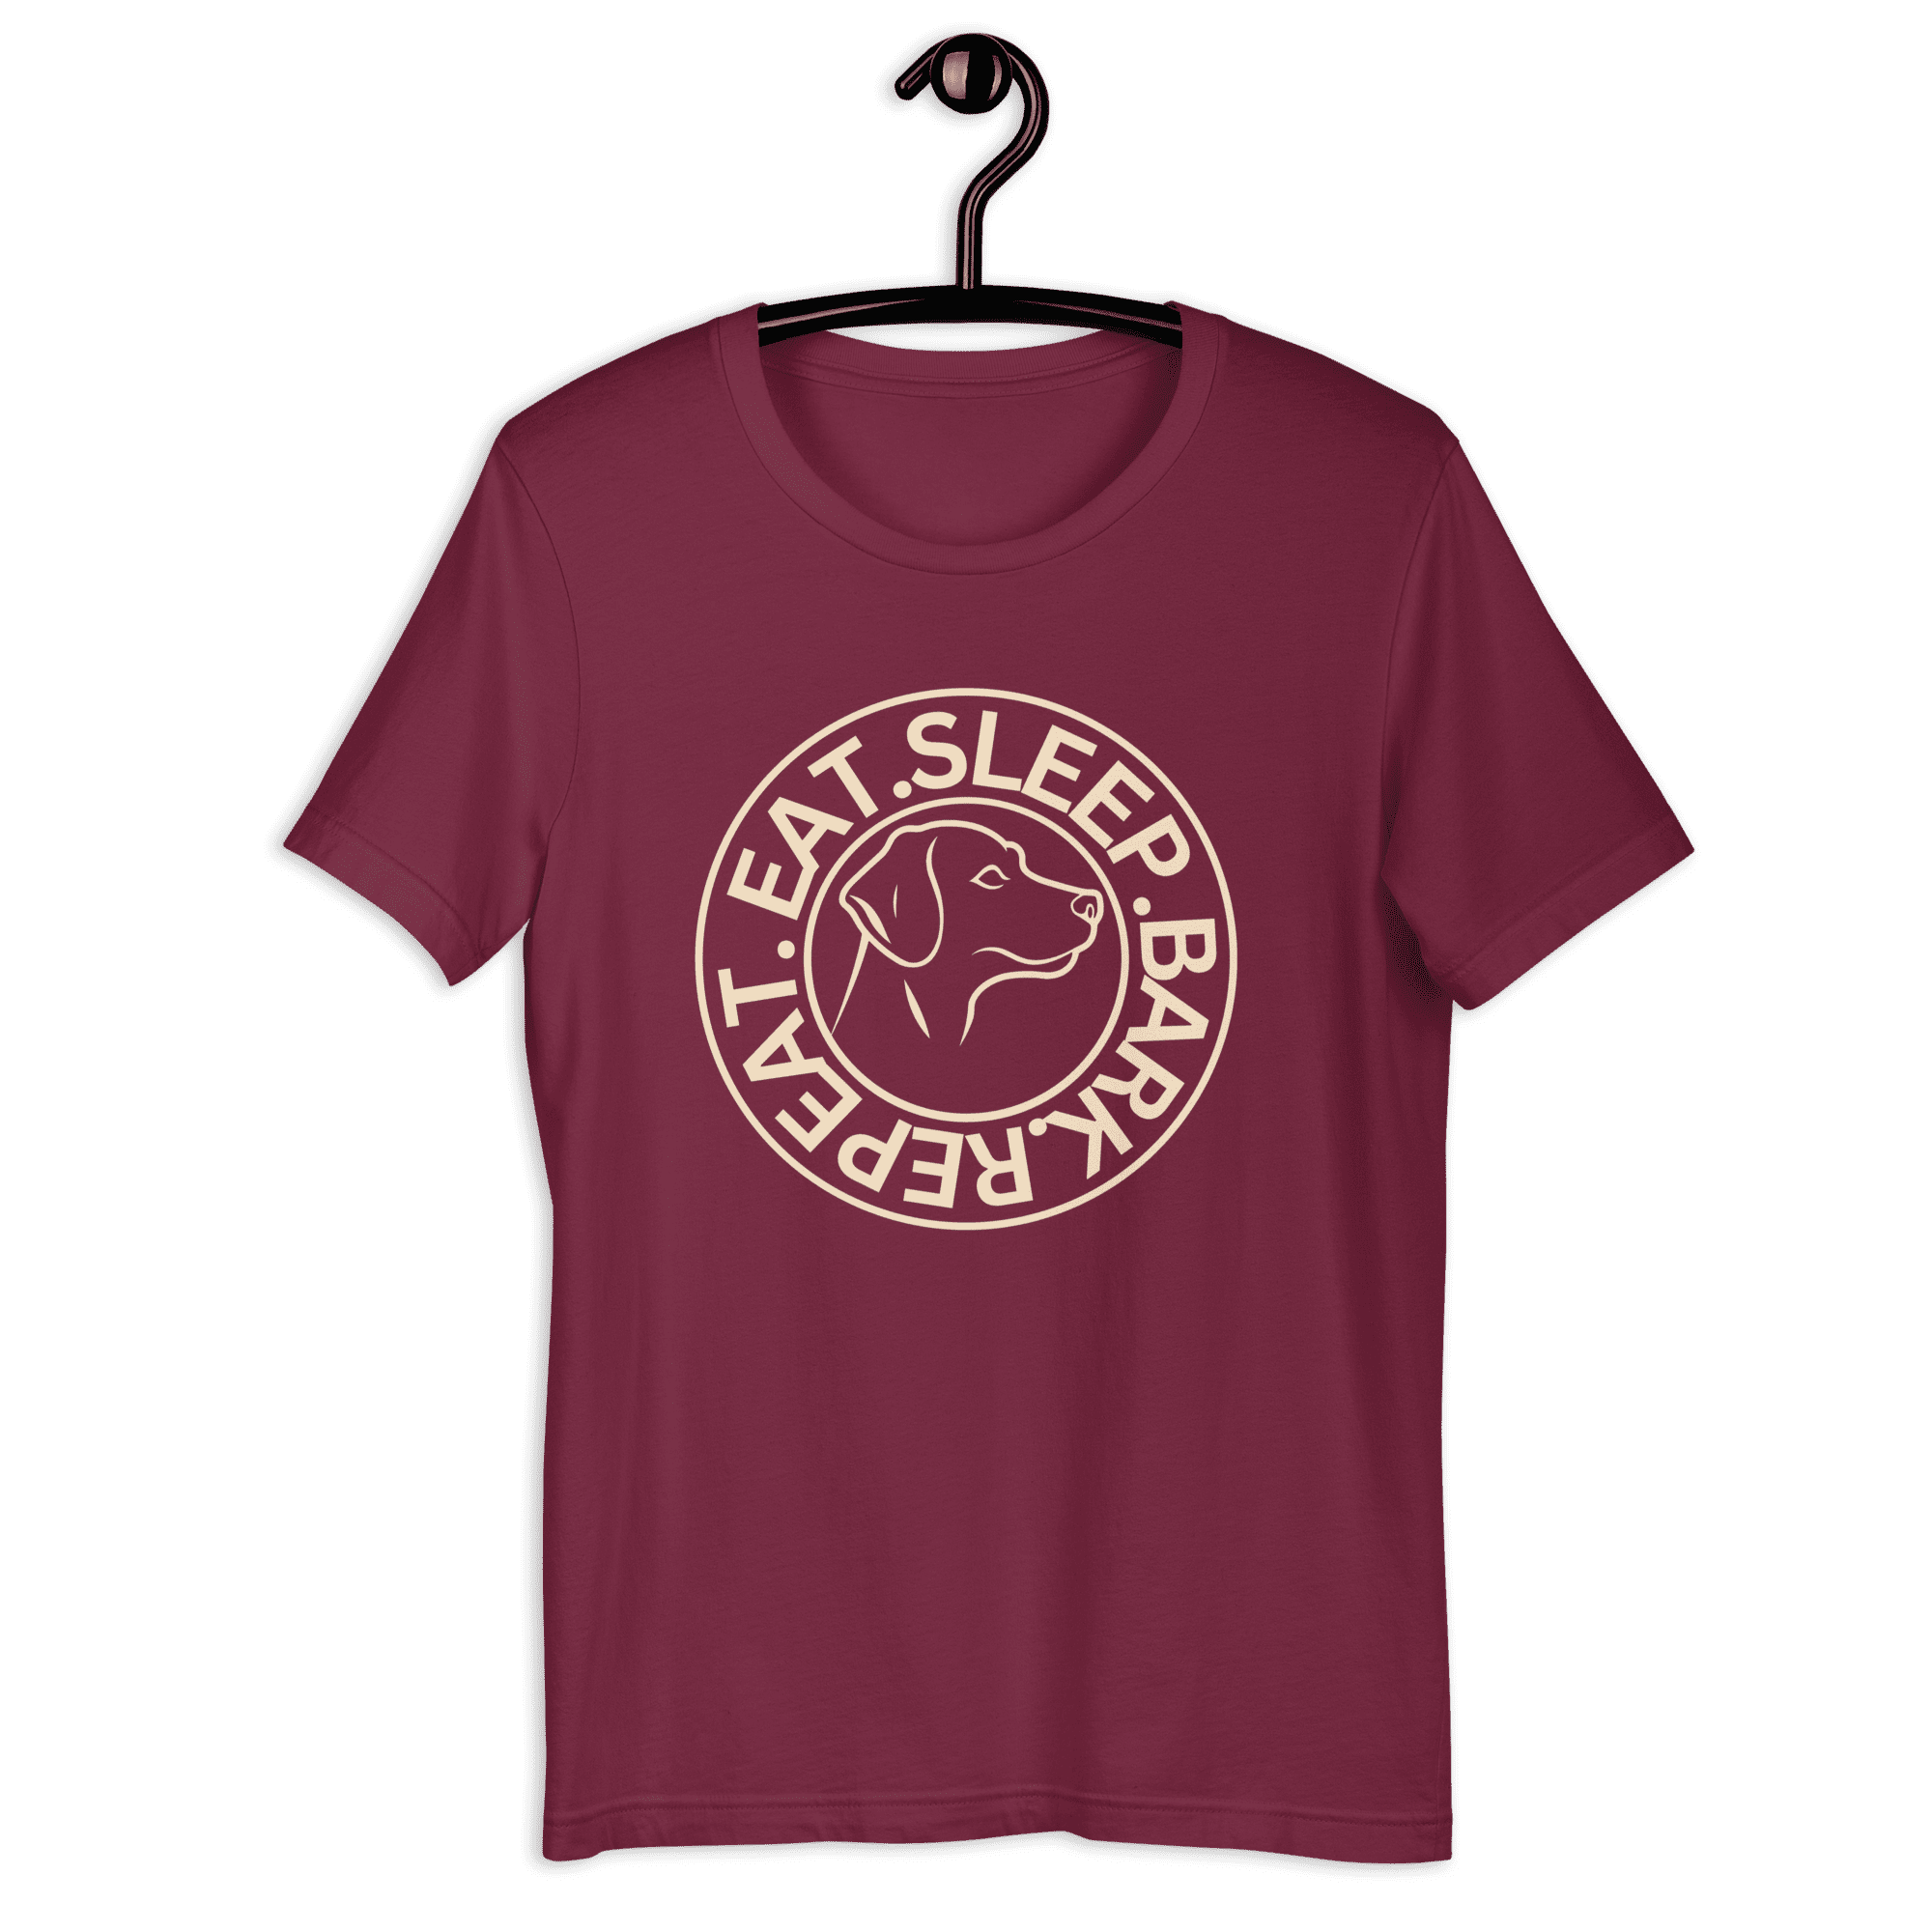 Eat Sleep Bark Repeat Labrador Retriever Unisex T-Shirt. Burgundy